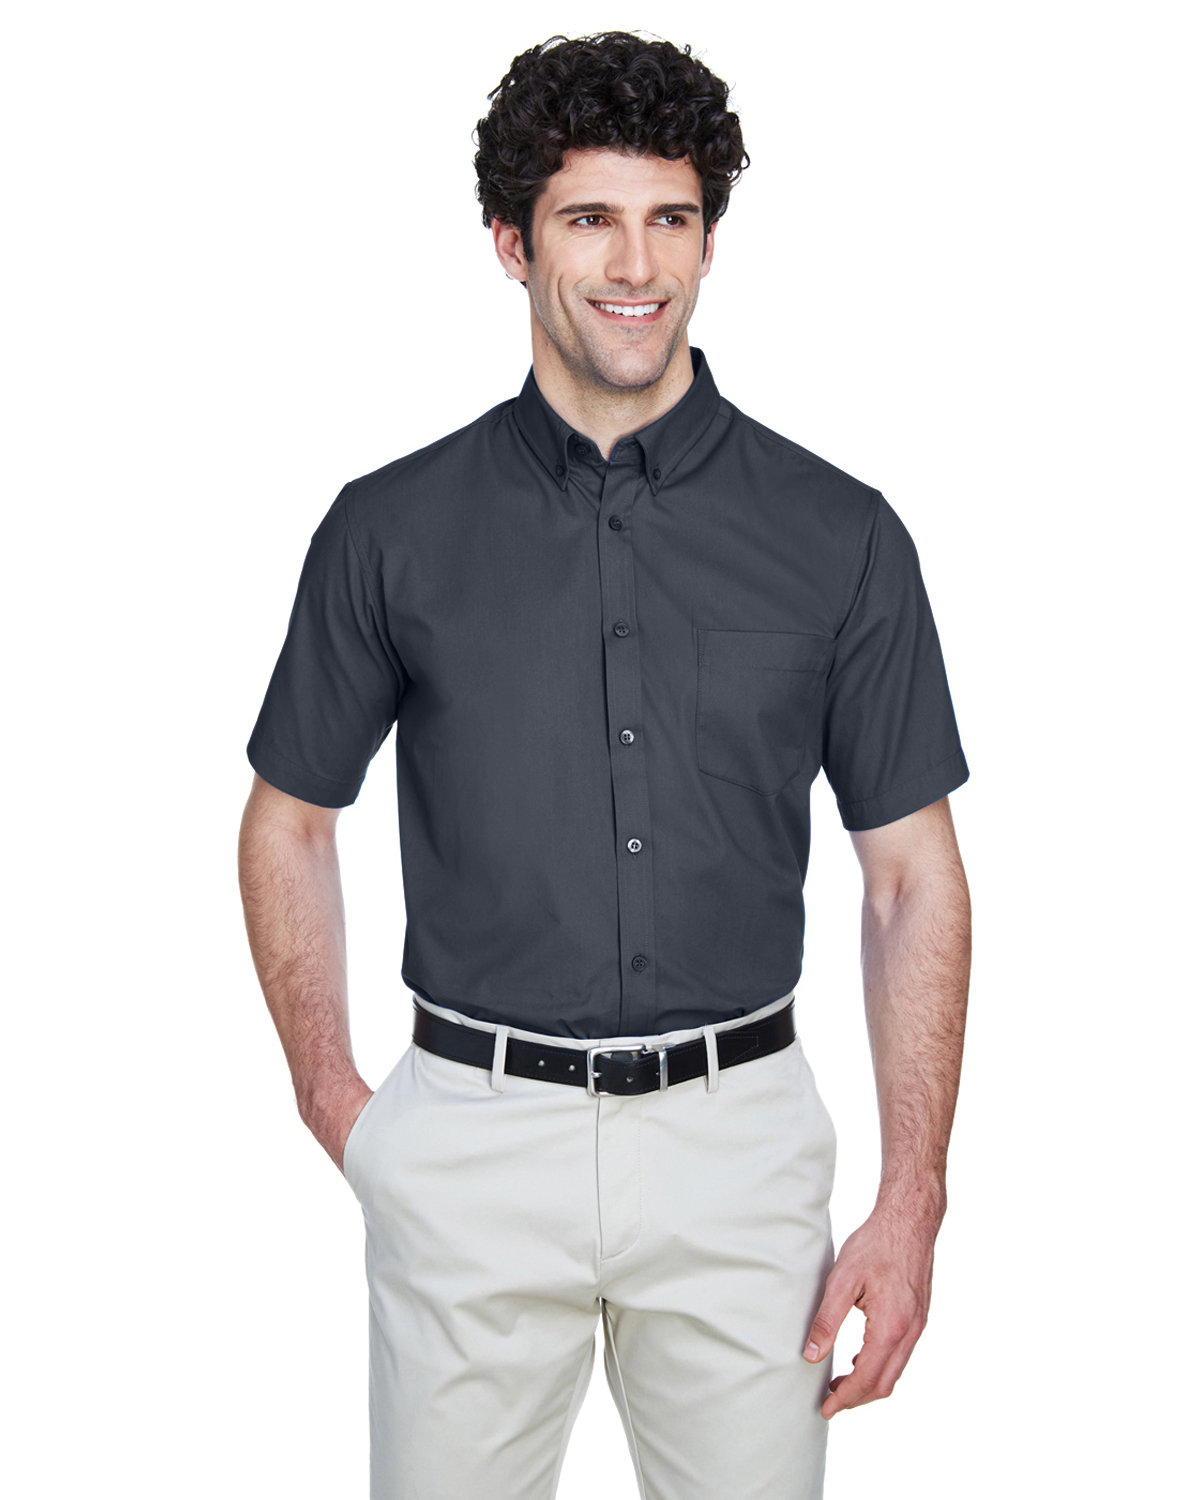 Core 365 Men's Optimum Short-Sleeve Twill Shirt CARBON 